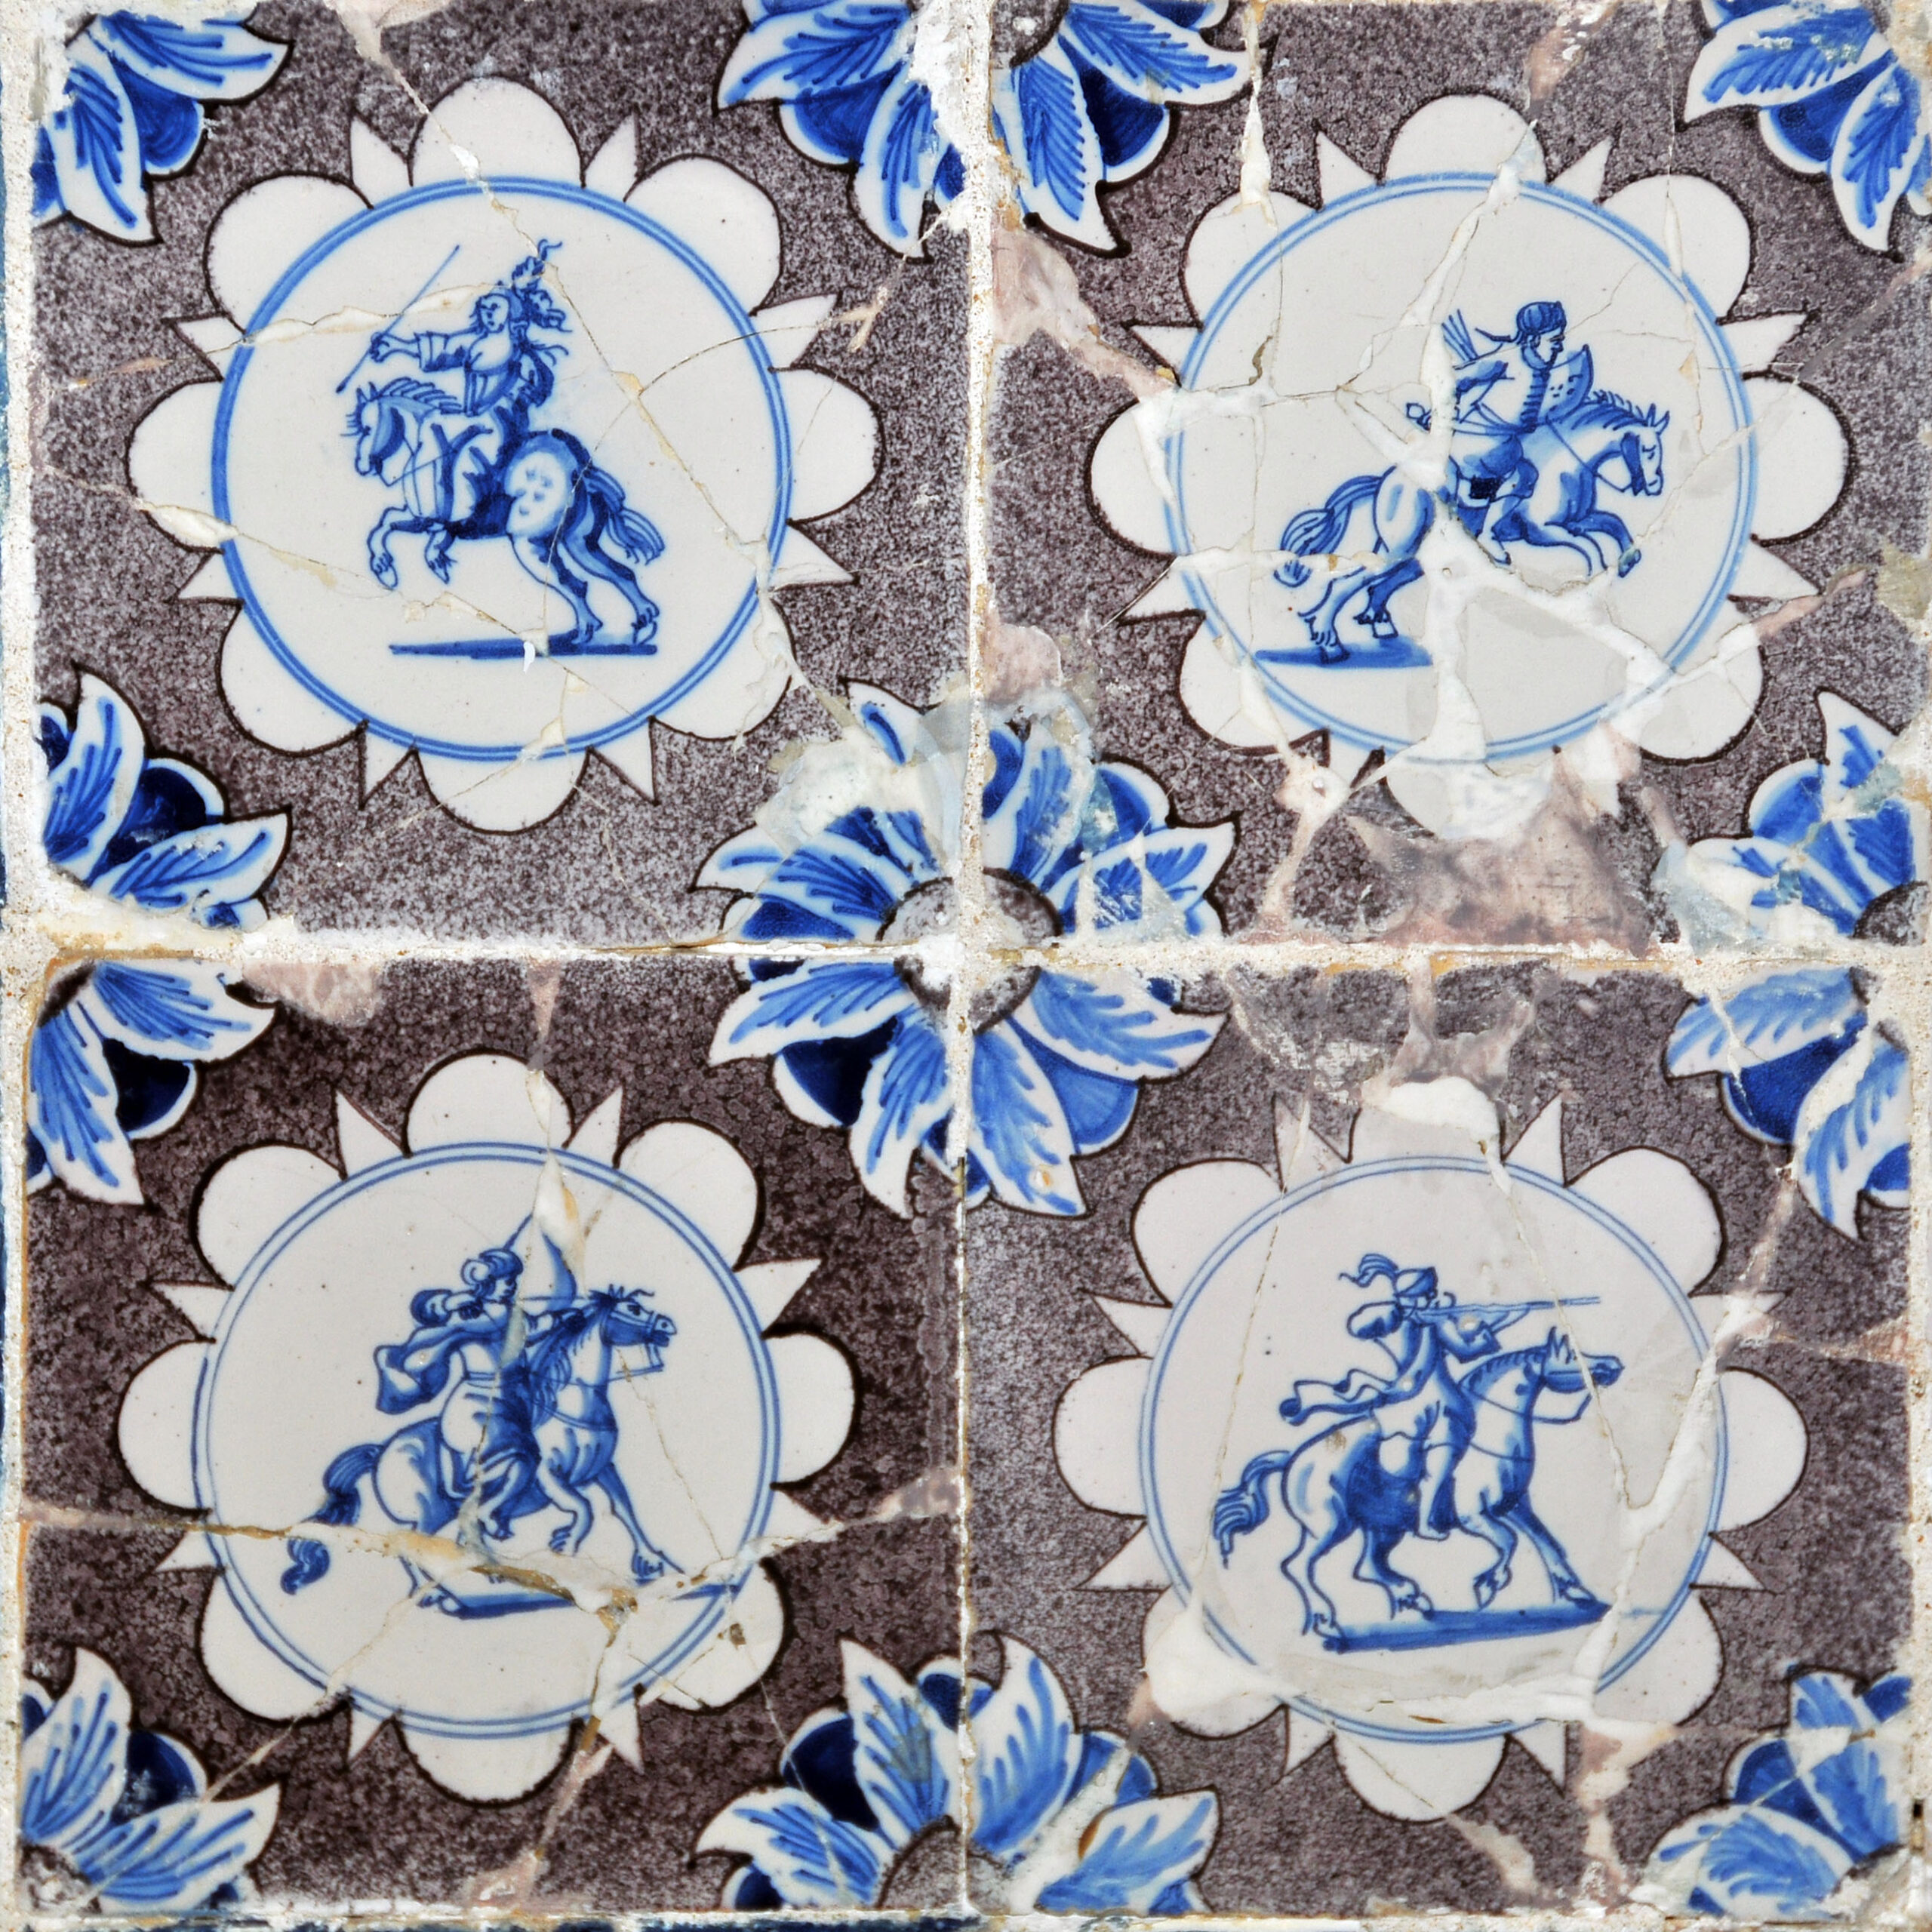 00775. Cuatro azulejos con motivos de caballeros. Capilla del Nazareno de Santa María. Cádiz.